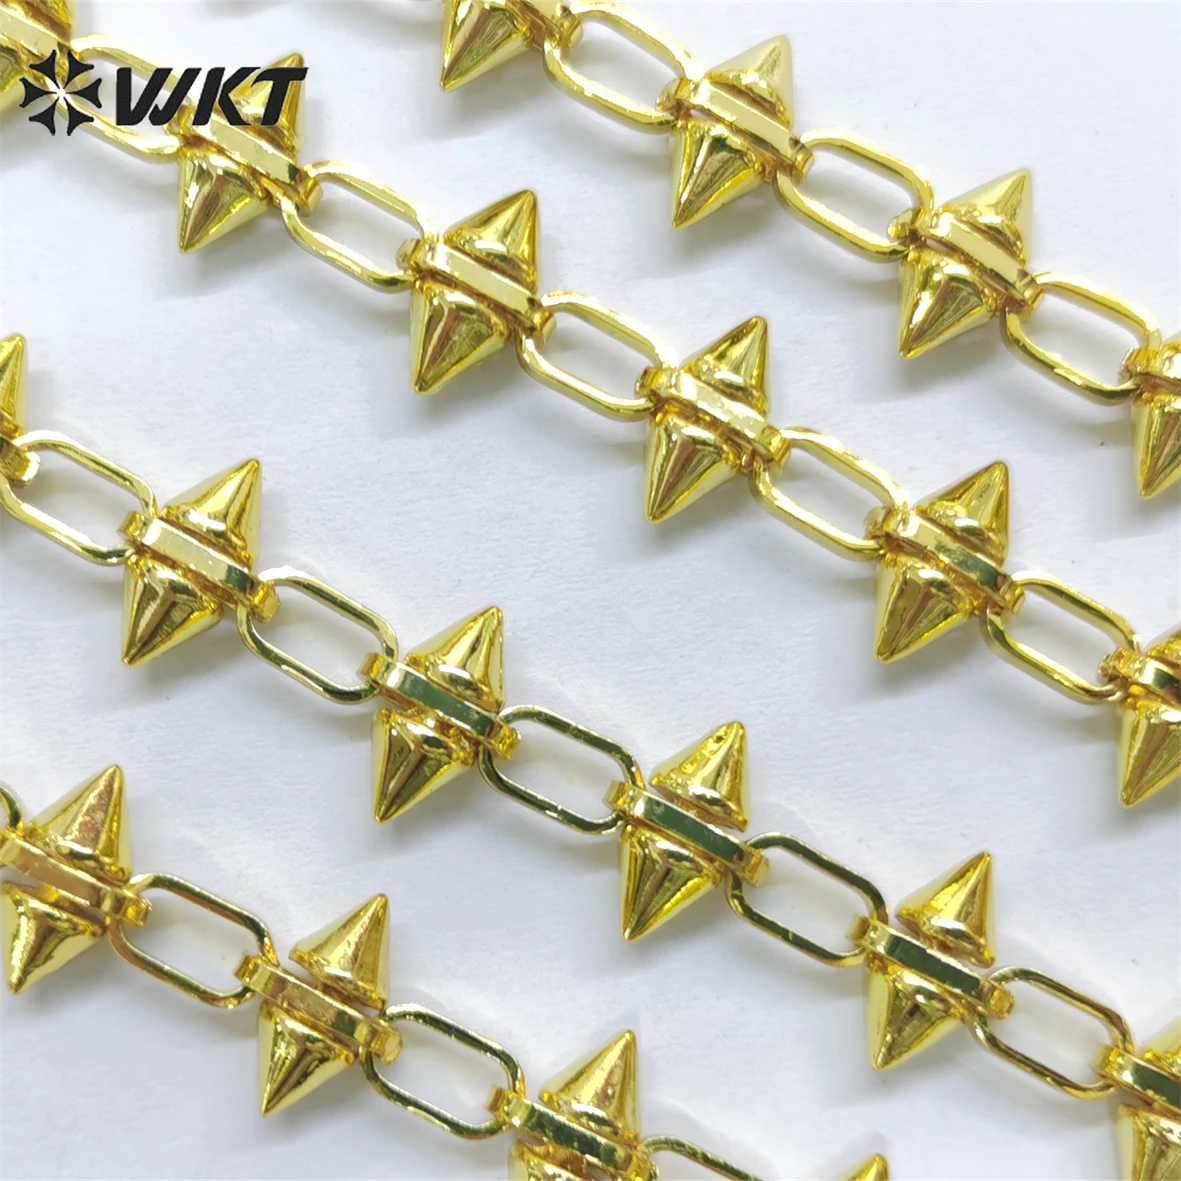 WT-BC183 WKT Unique Design Wide Curb Cuban Conical Link Zinc Alloy Gold Chain for Men Women Jewelry Bracelet Necklace Gifts